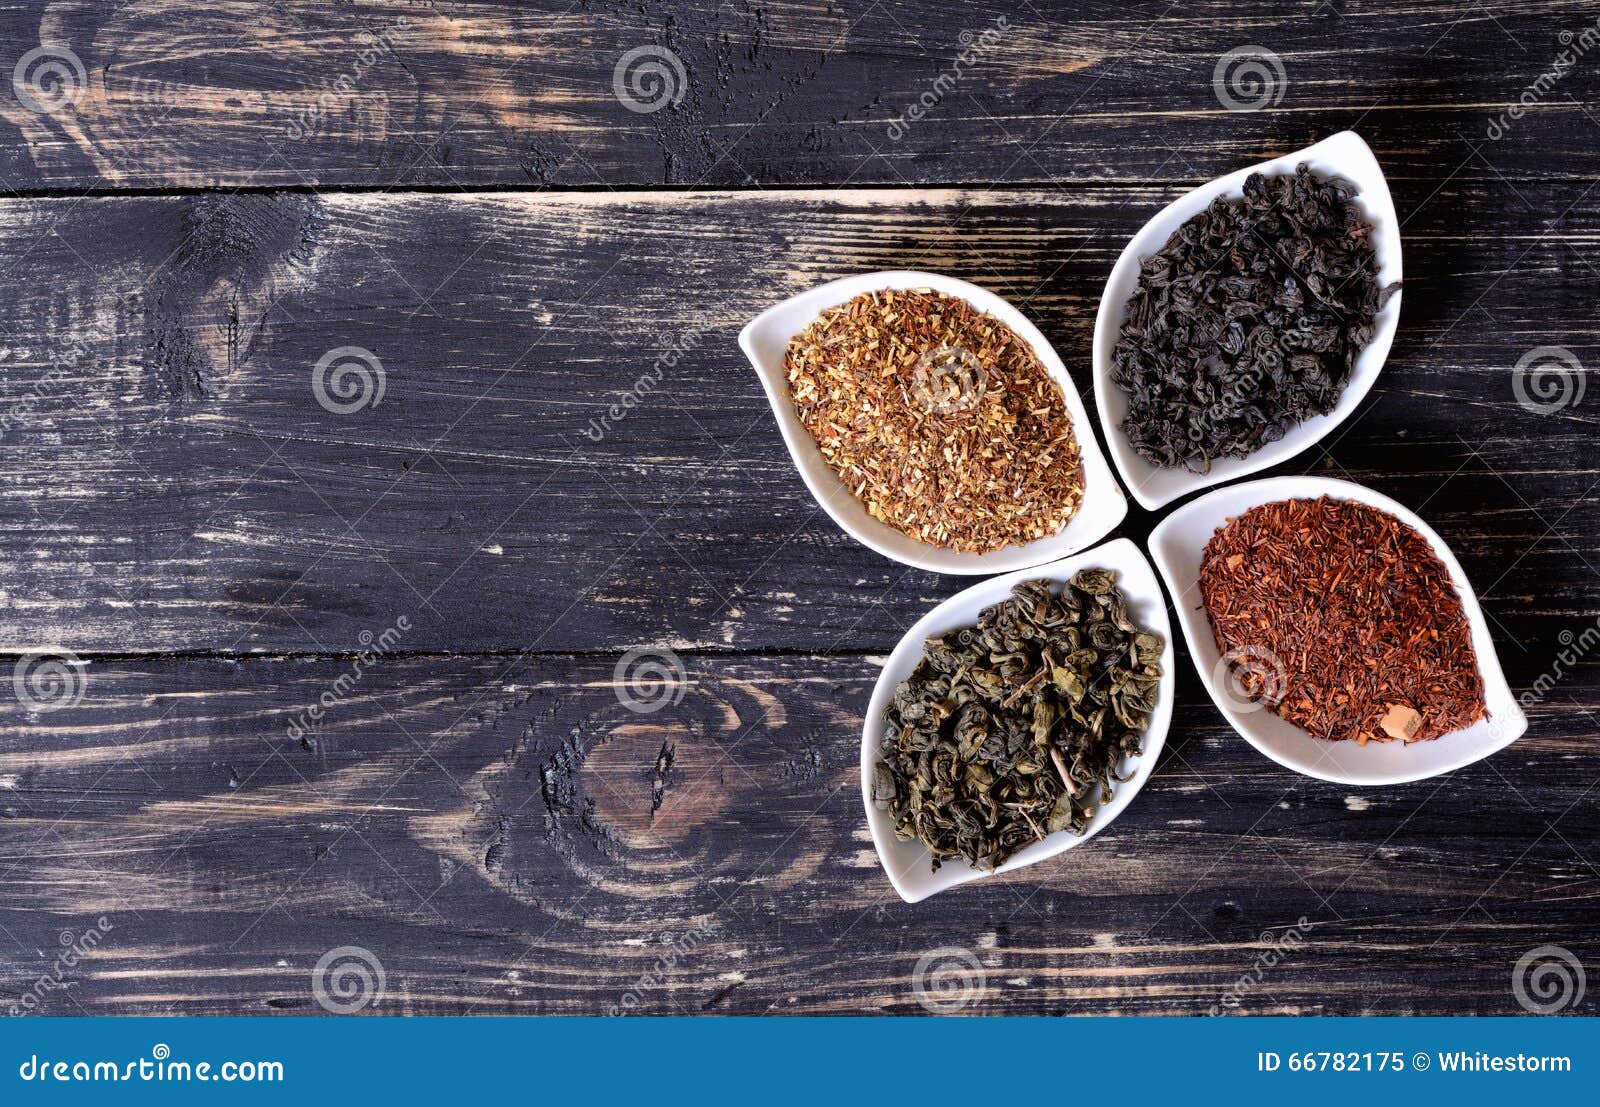 Assortment of dry tea stock image. Image of leaf, food - 66782175